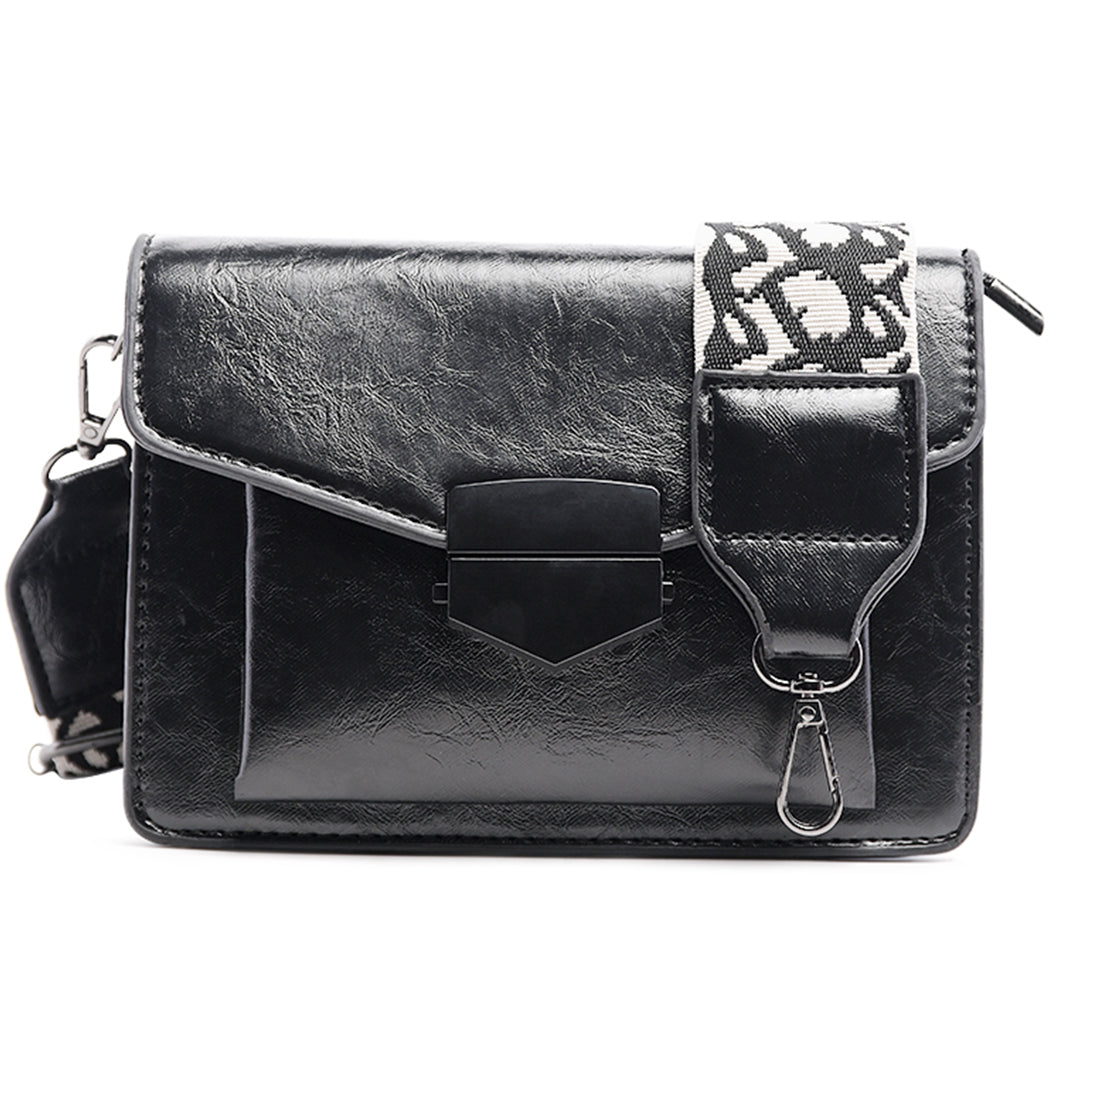 Black Crossbody Sling Bag - One Size